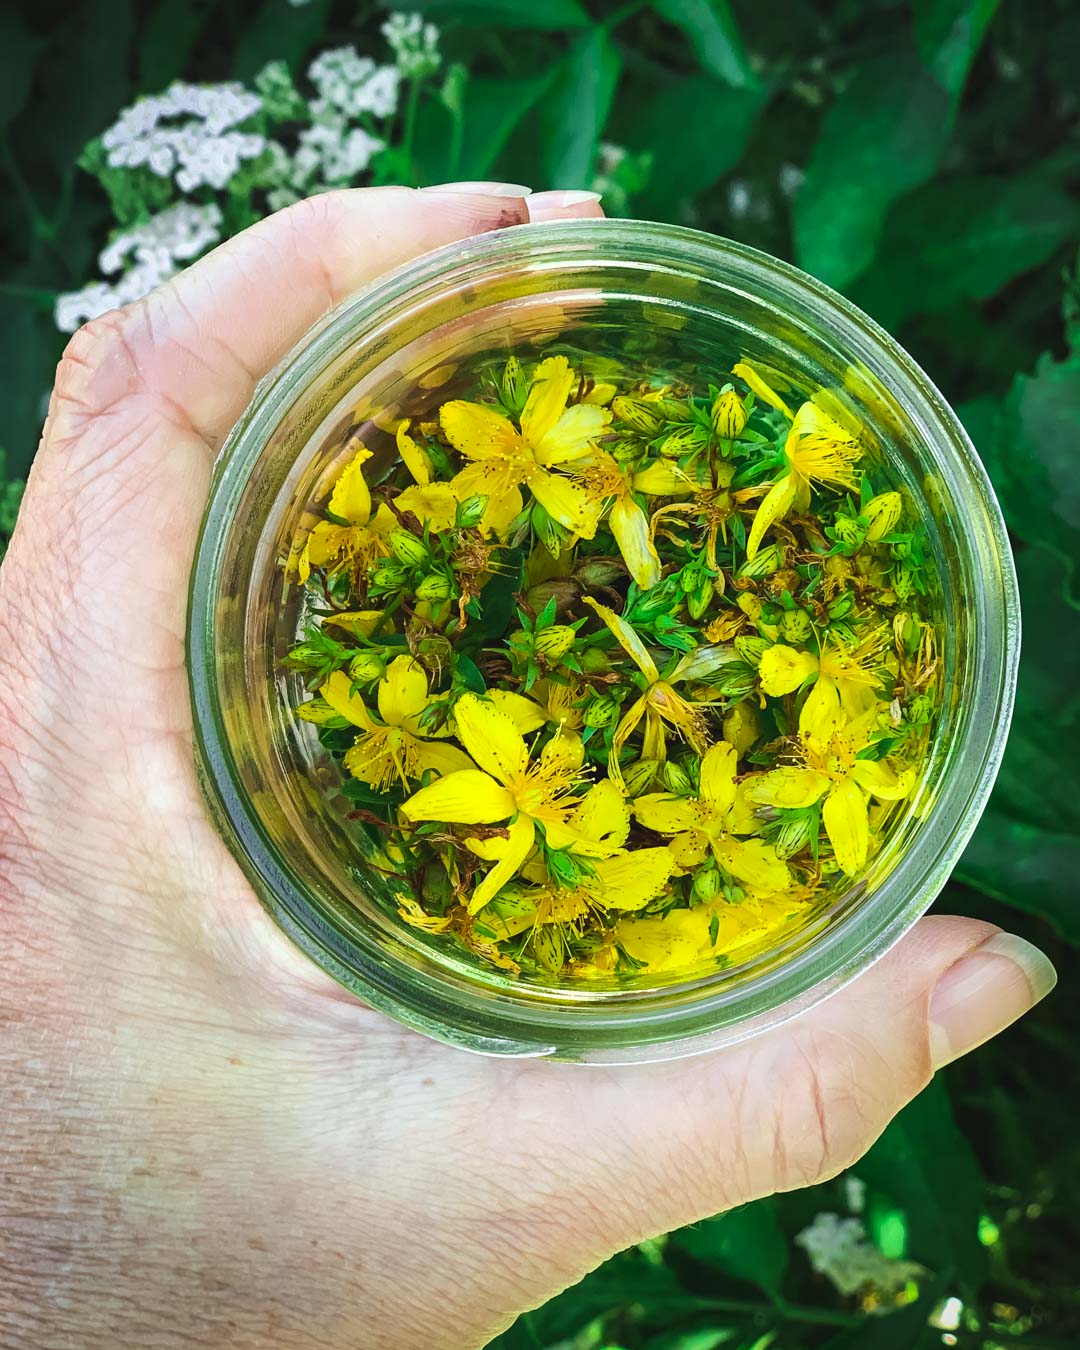 A jar of St. Johns wort flowers